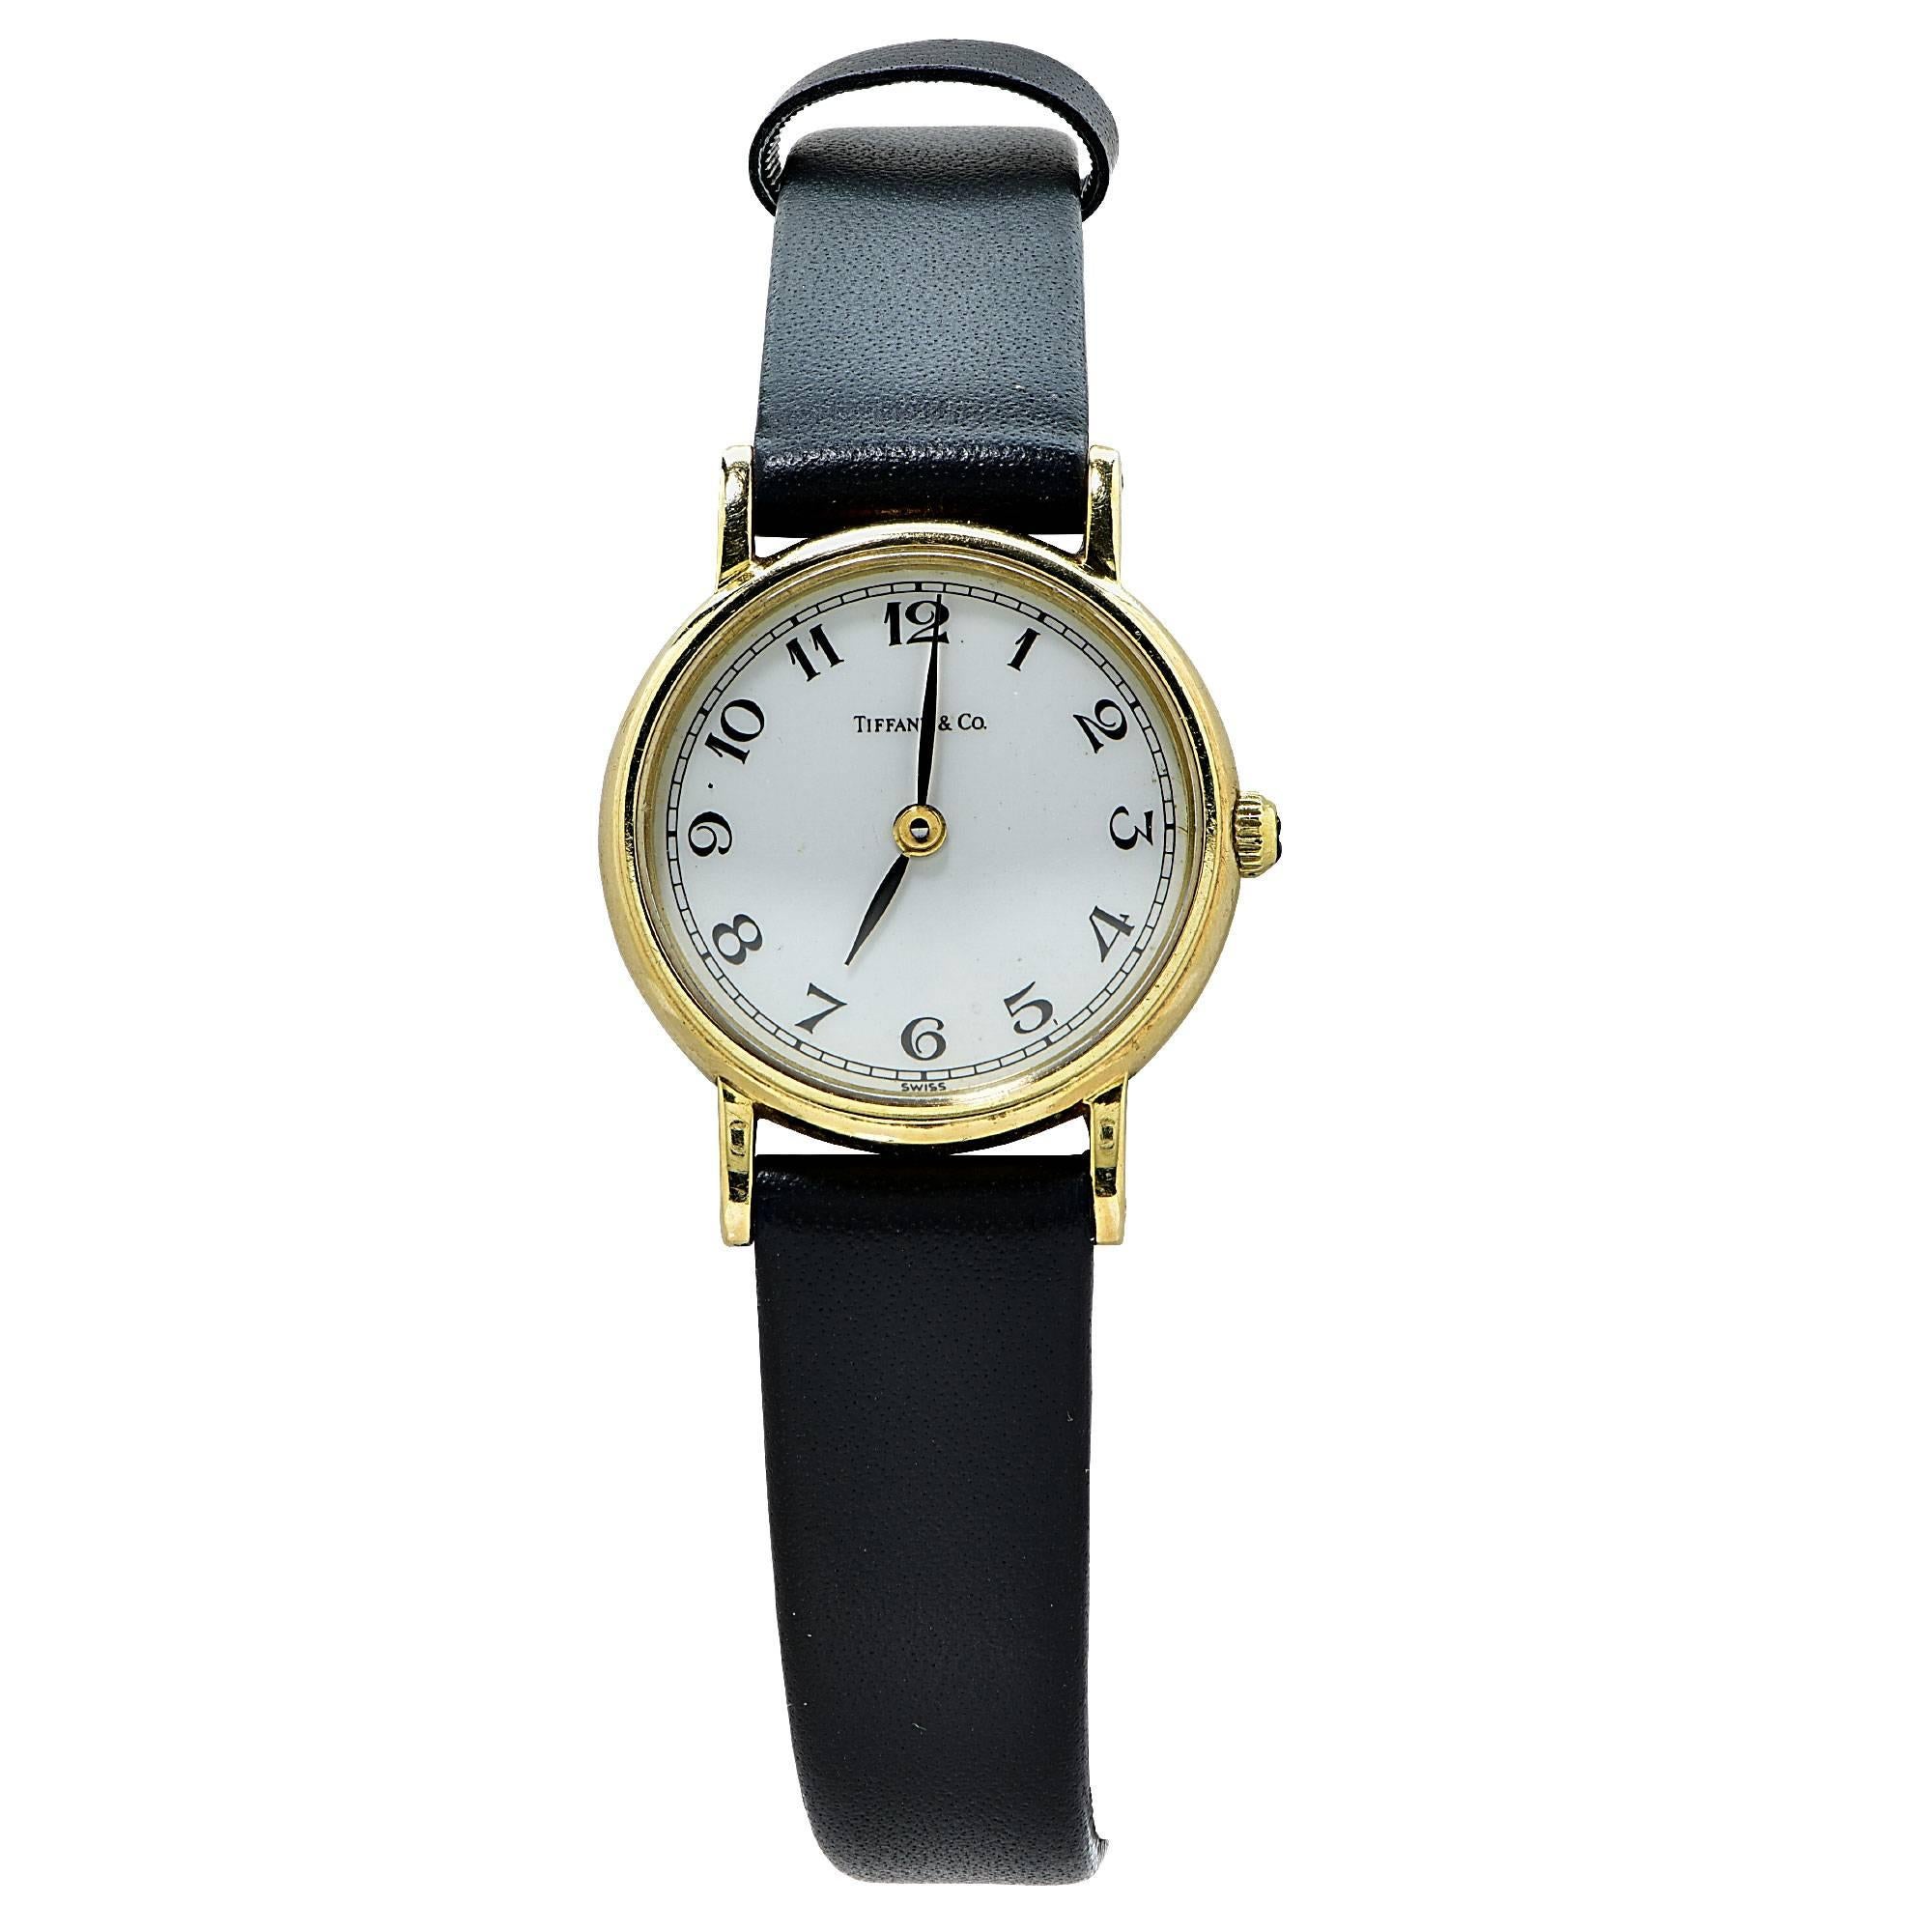 Tiffany & Co. yellow gold Leather Strap Wristwatch